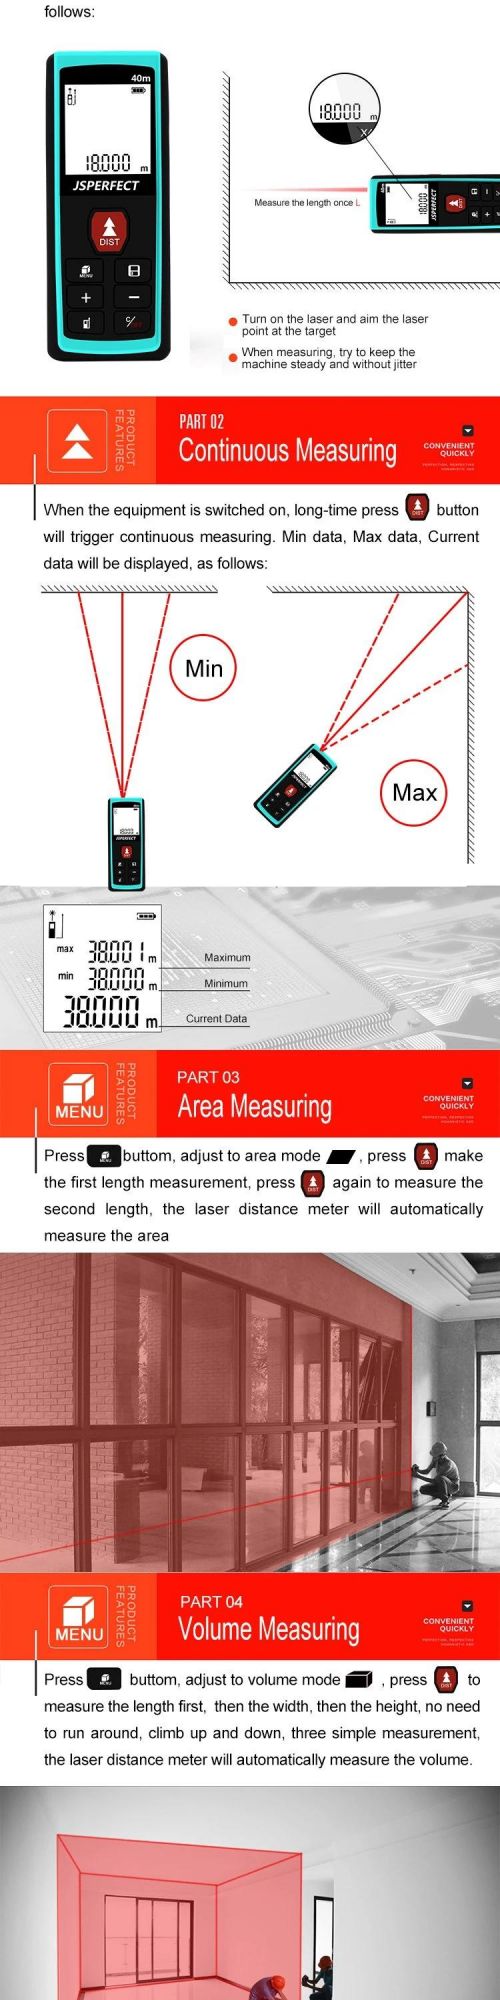 40m Handheld Laser Distance Meter for Indoor Use